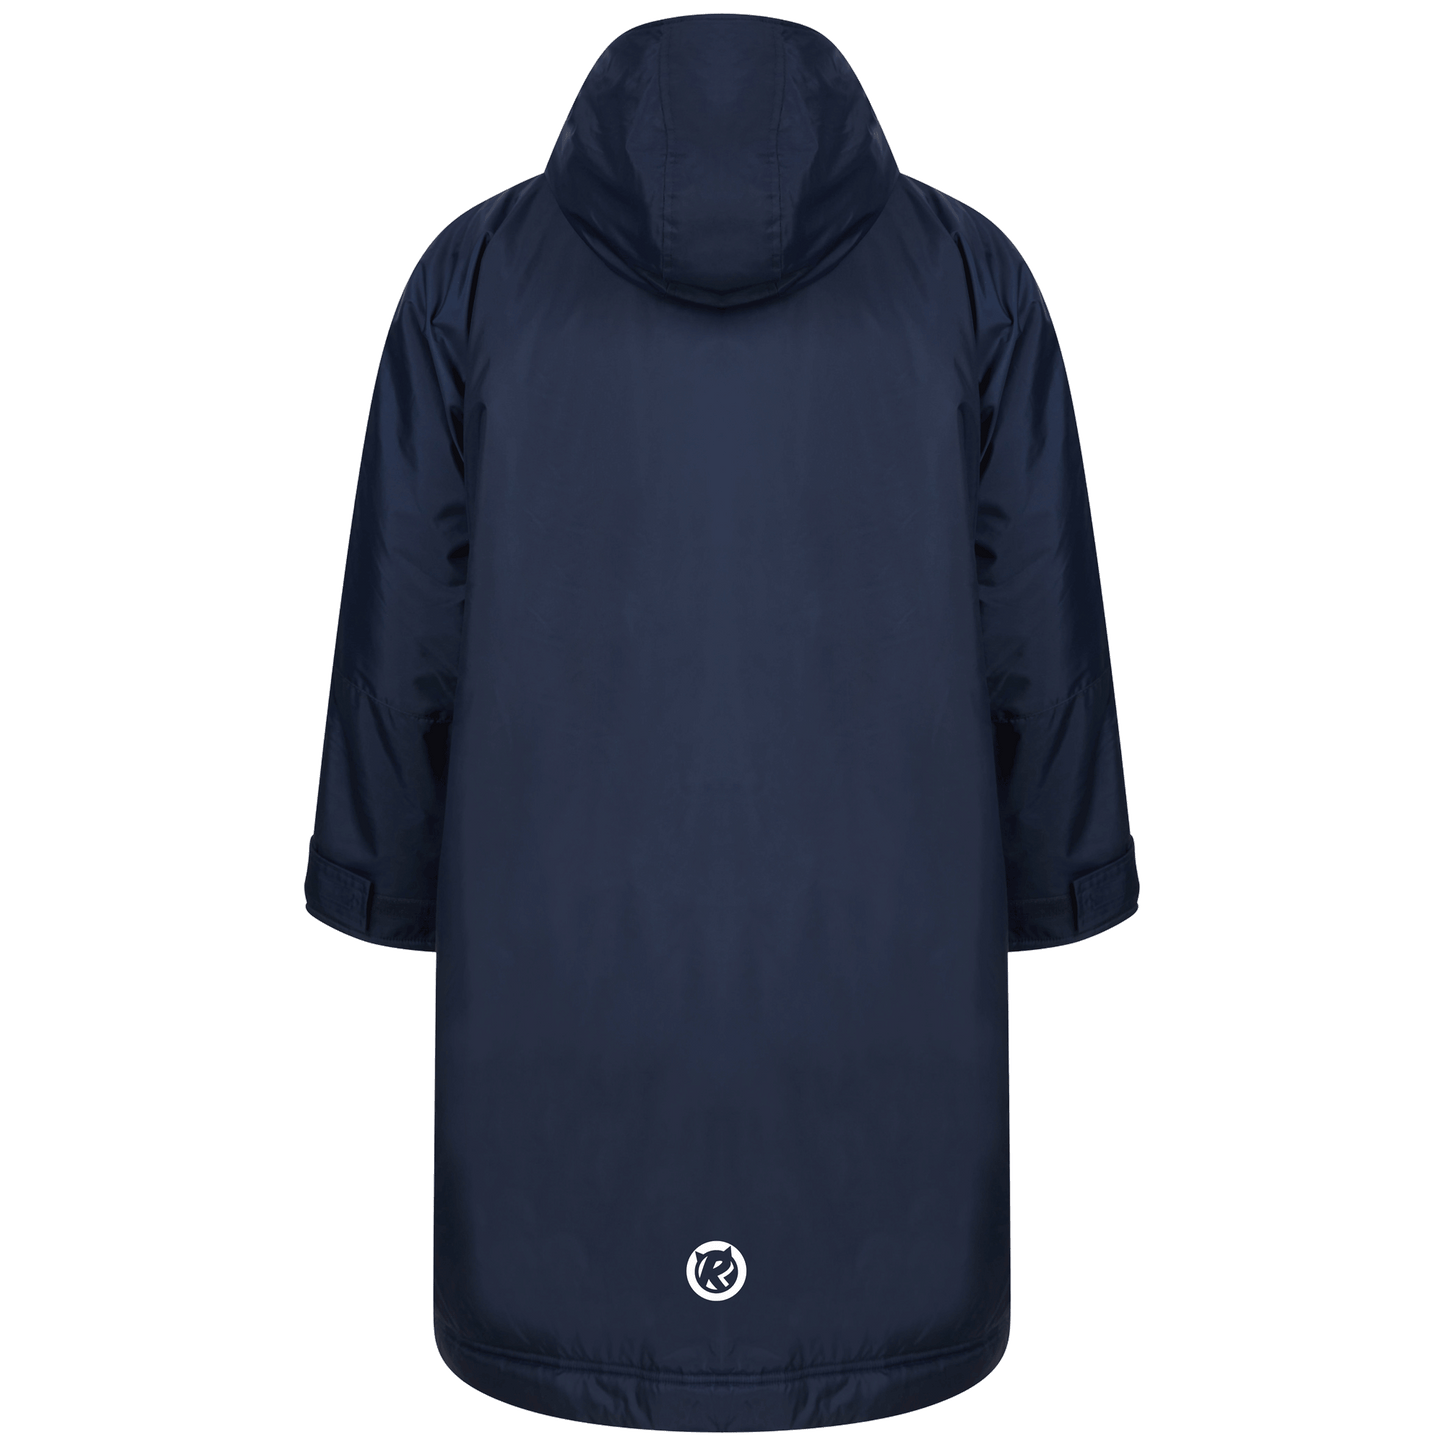 Rat Robe - Sherpa Fleece Lined Changing Robe - Navy